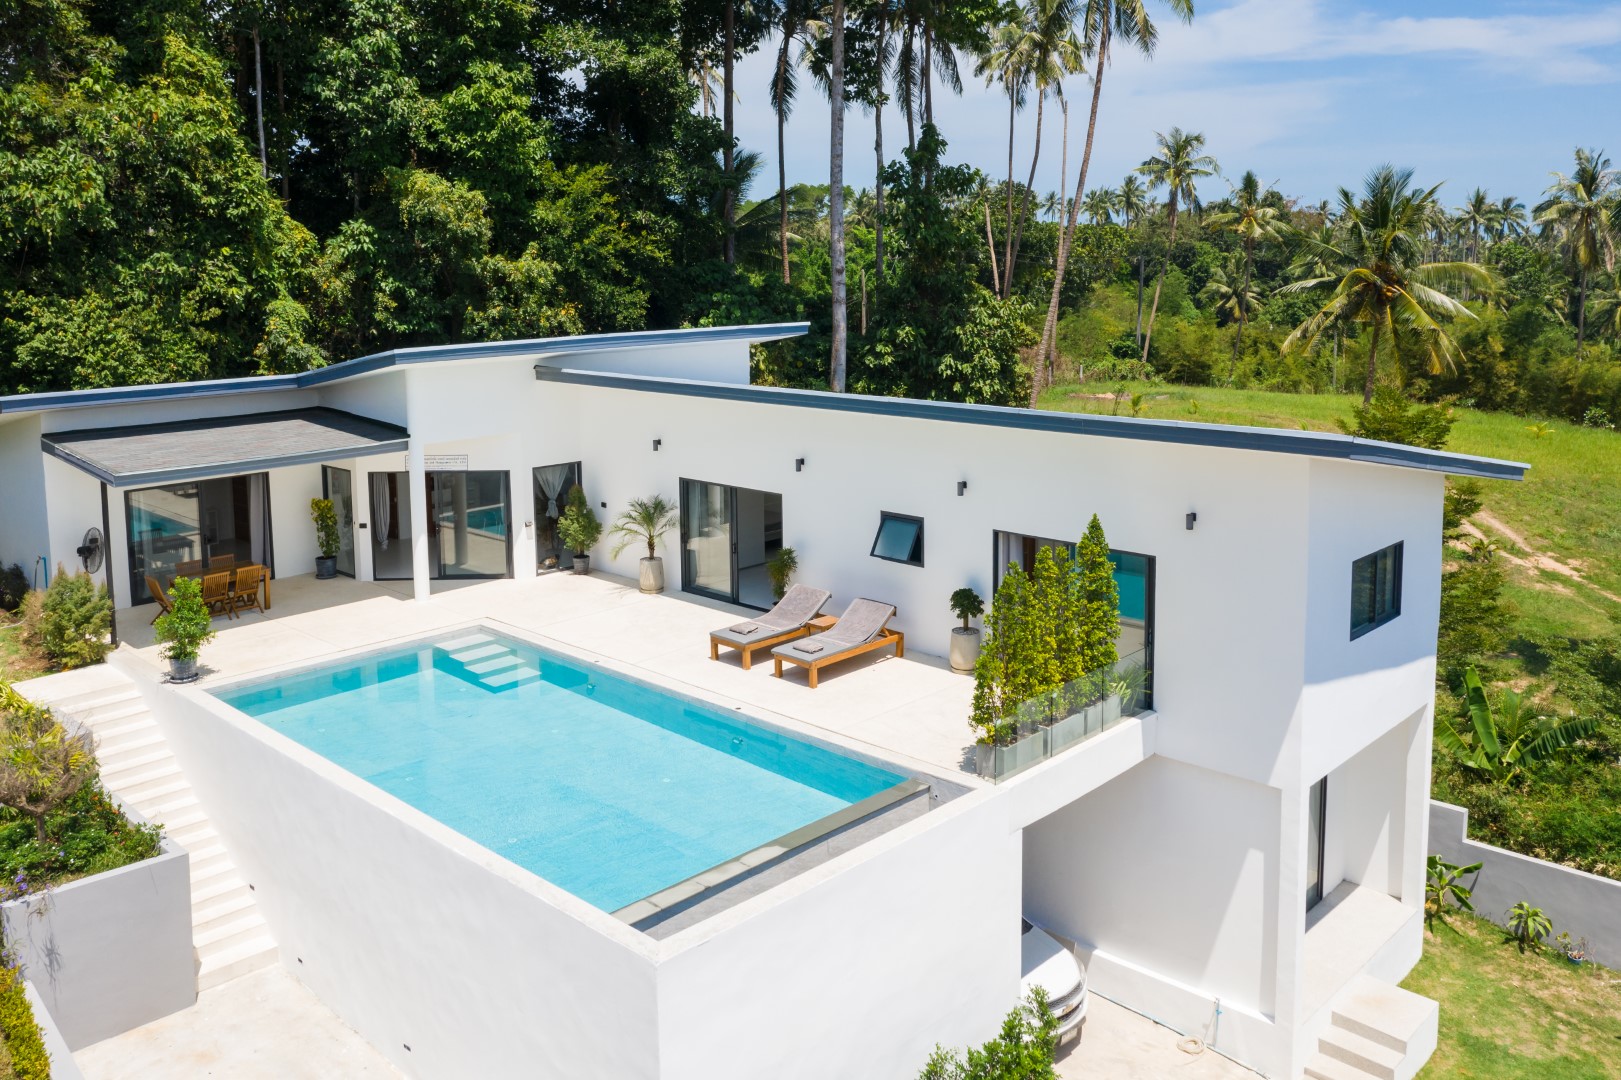 3 bedroom villa with pool